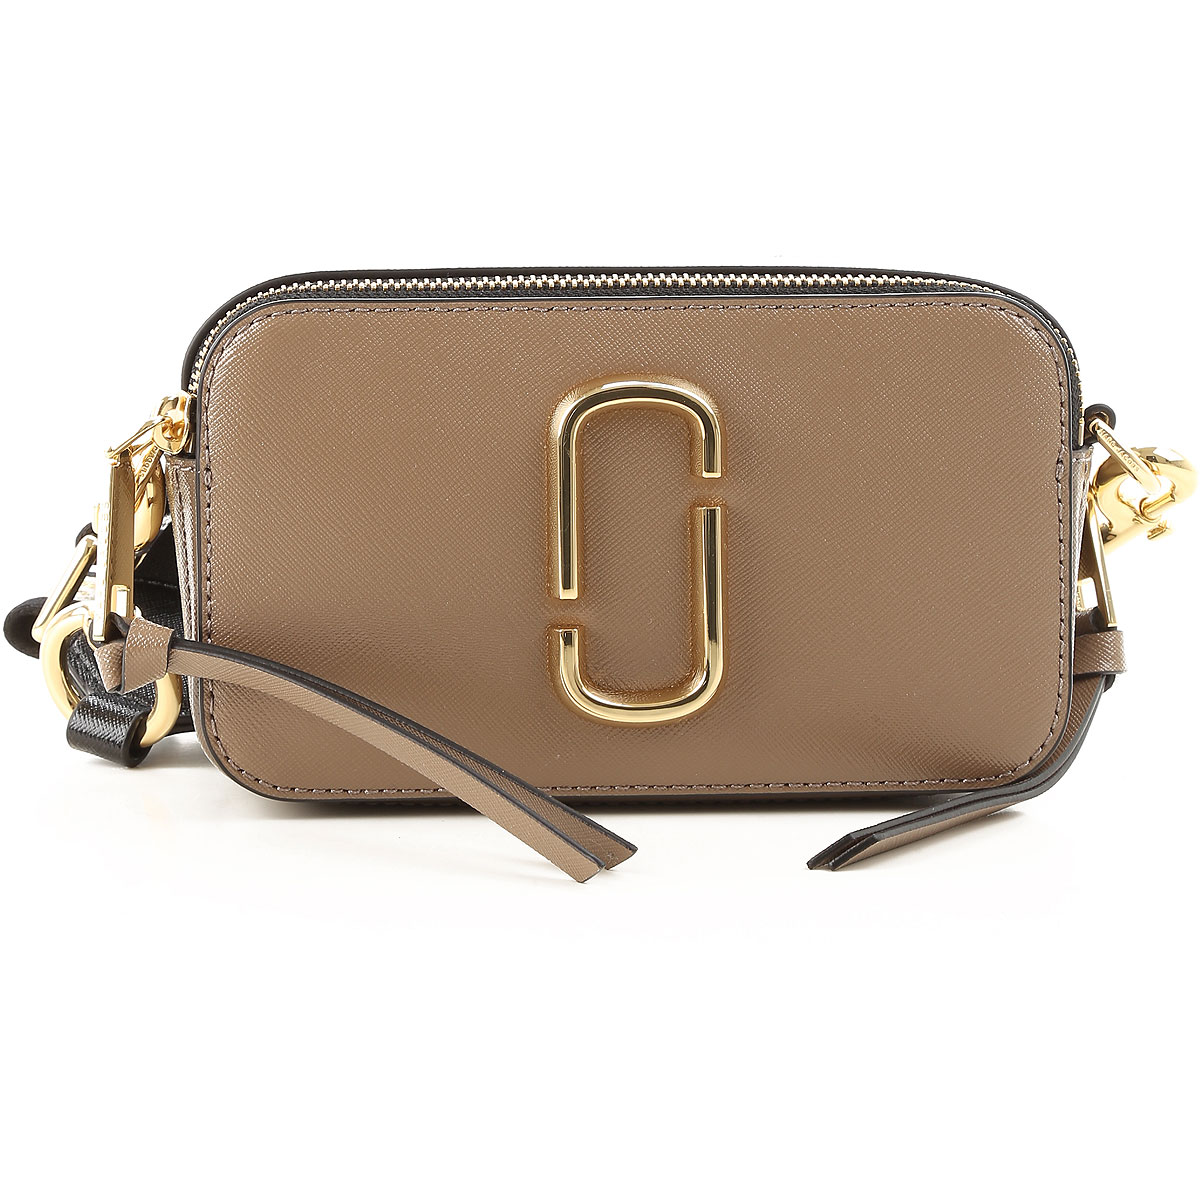 Handbags Marc Jacobs, Style code: m0014146-064-A963